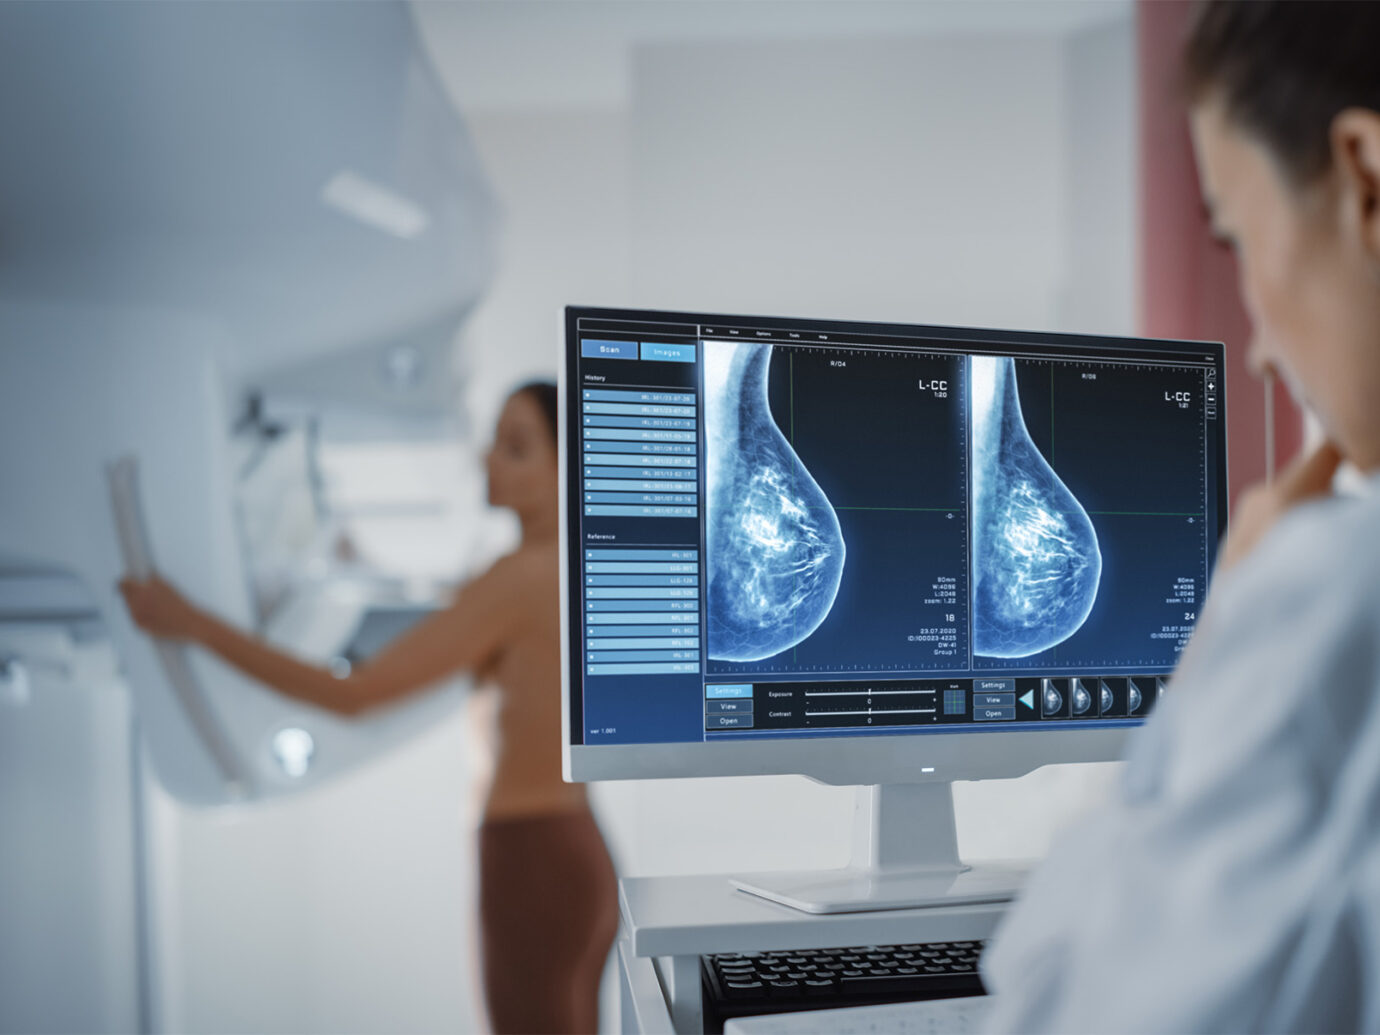 Radiologist breast imaging